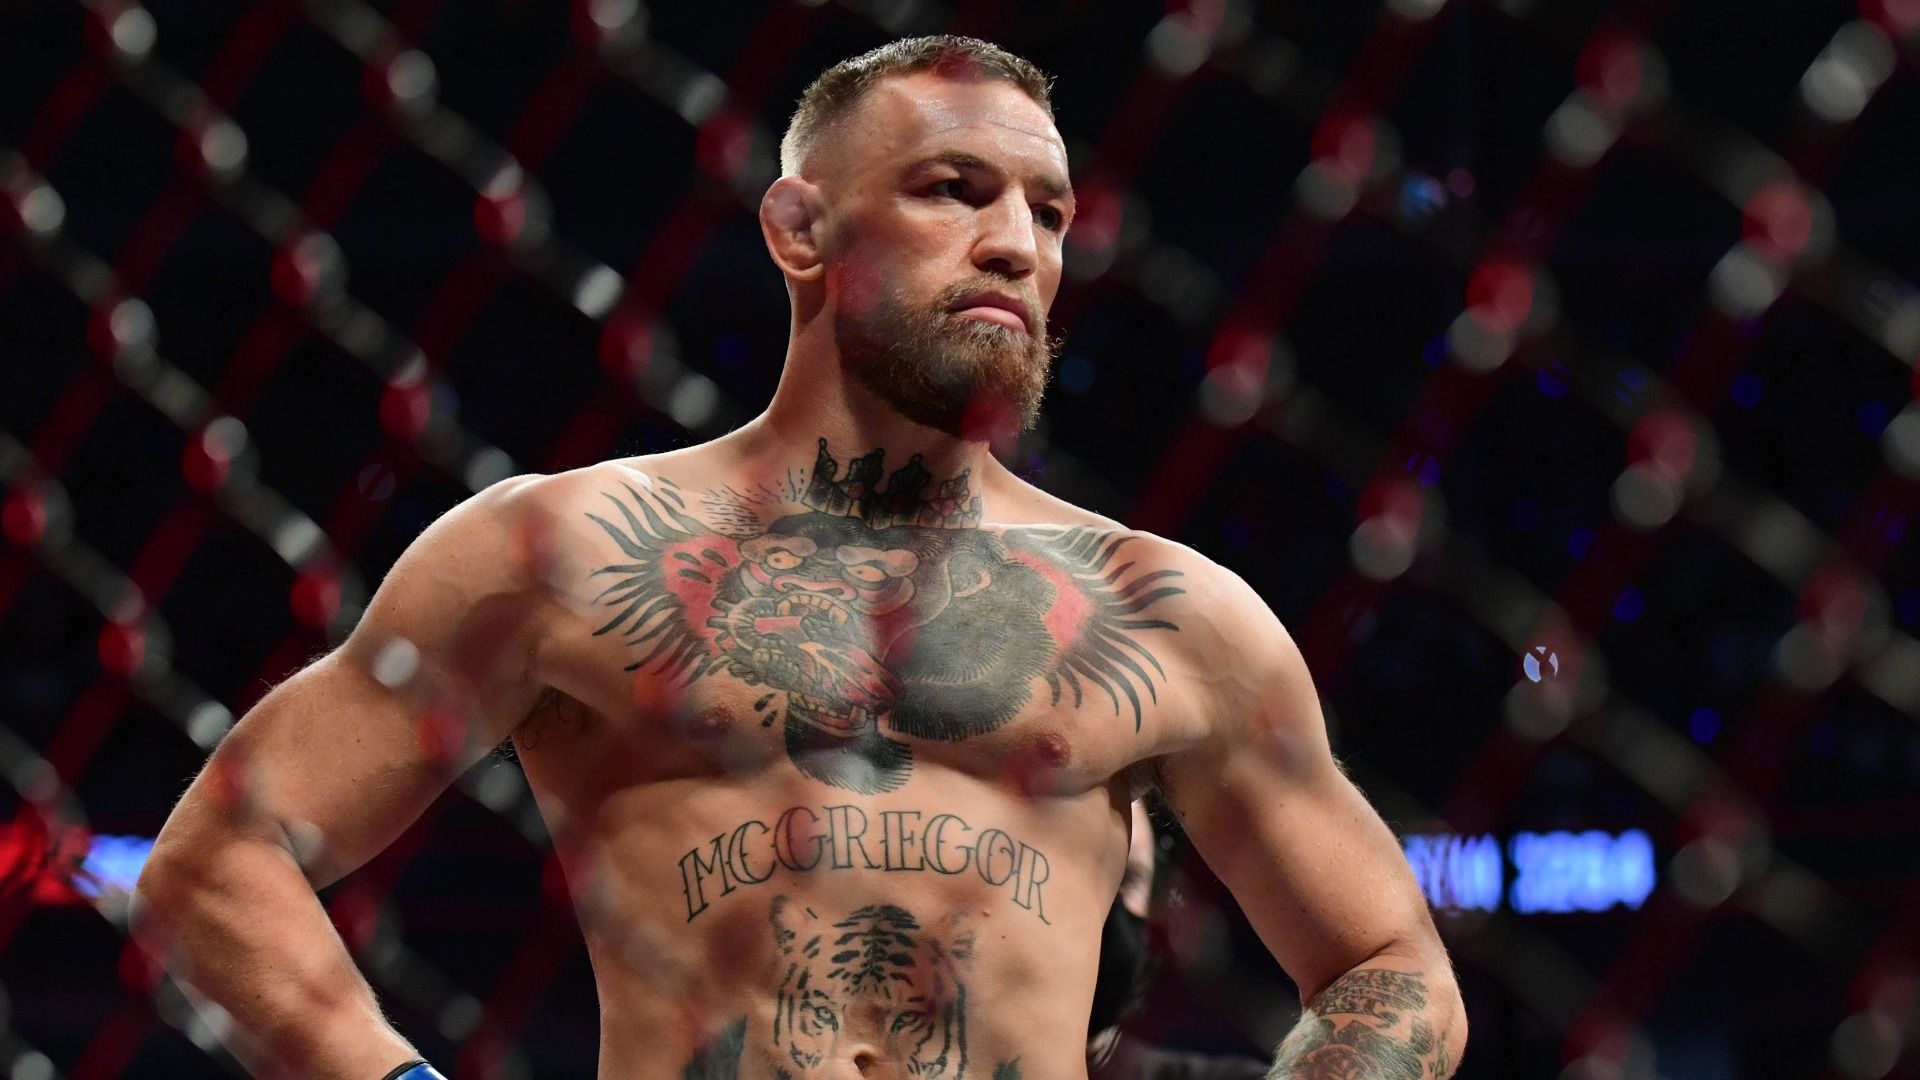 Former UFC Fighter Thomson Believes League Delays McGregor's Return On Purpose